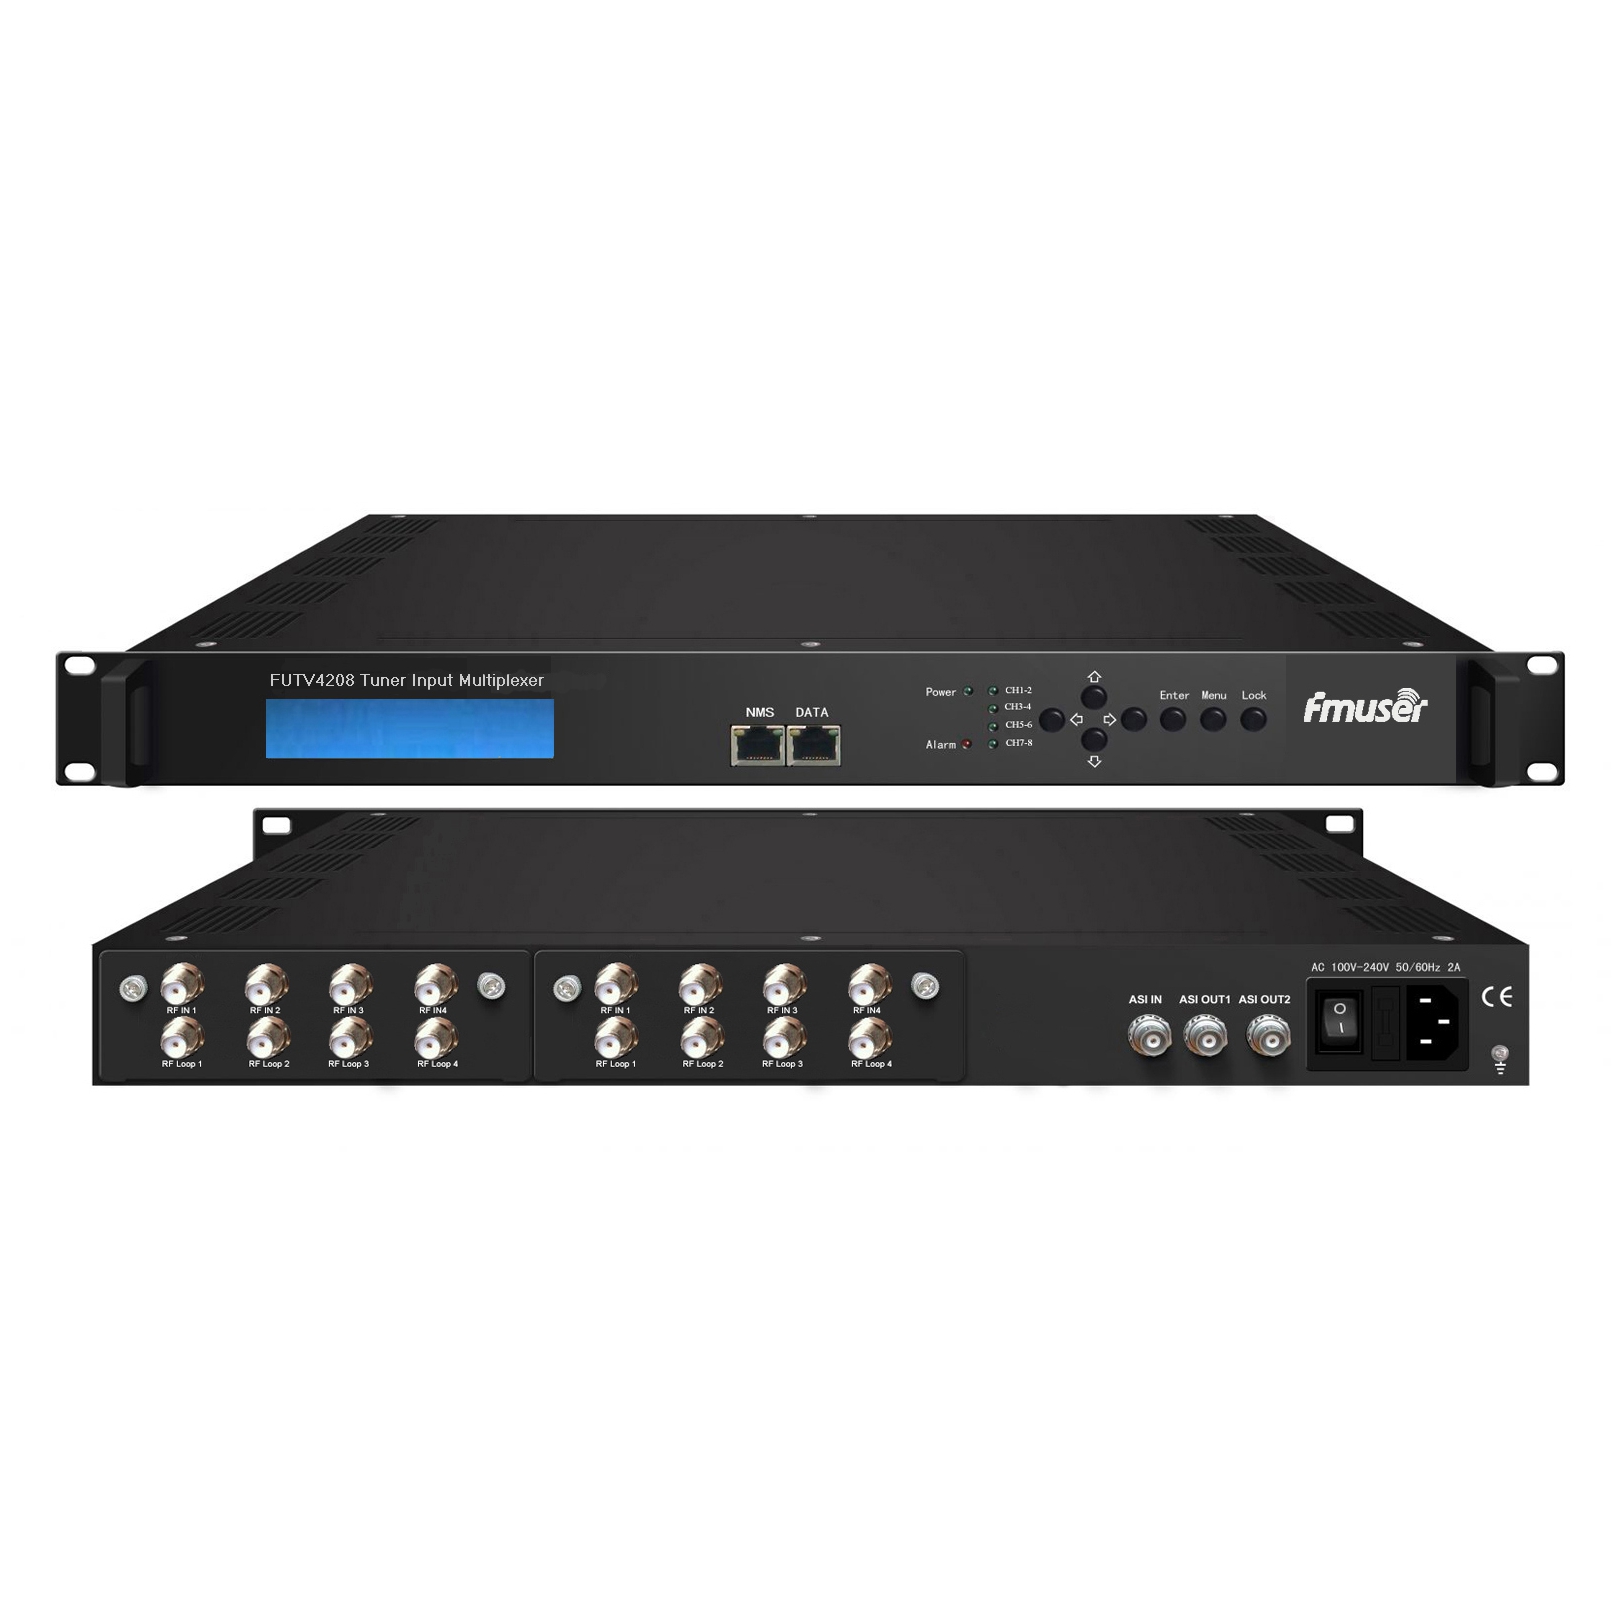 FMUSER FUTV4208 8 Tuner IRD (8 DVB-S2 / T RF Input, 1 ASI In, 2 ASI 1 IP Output) Multiplexor